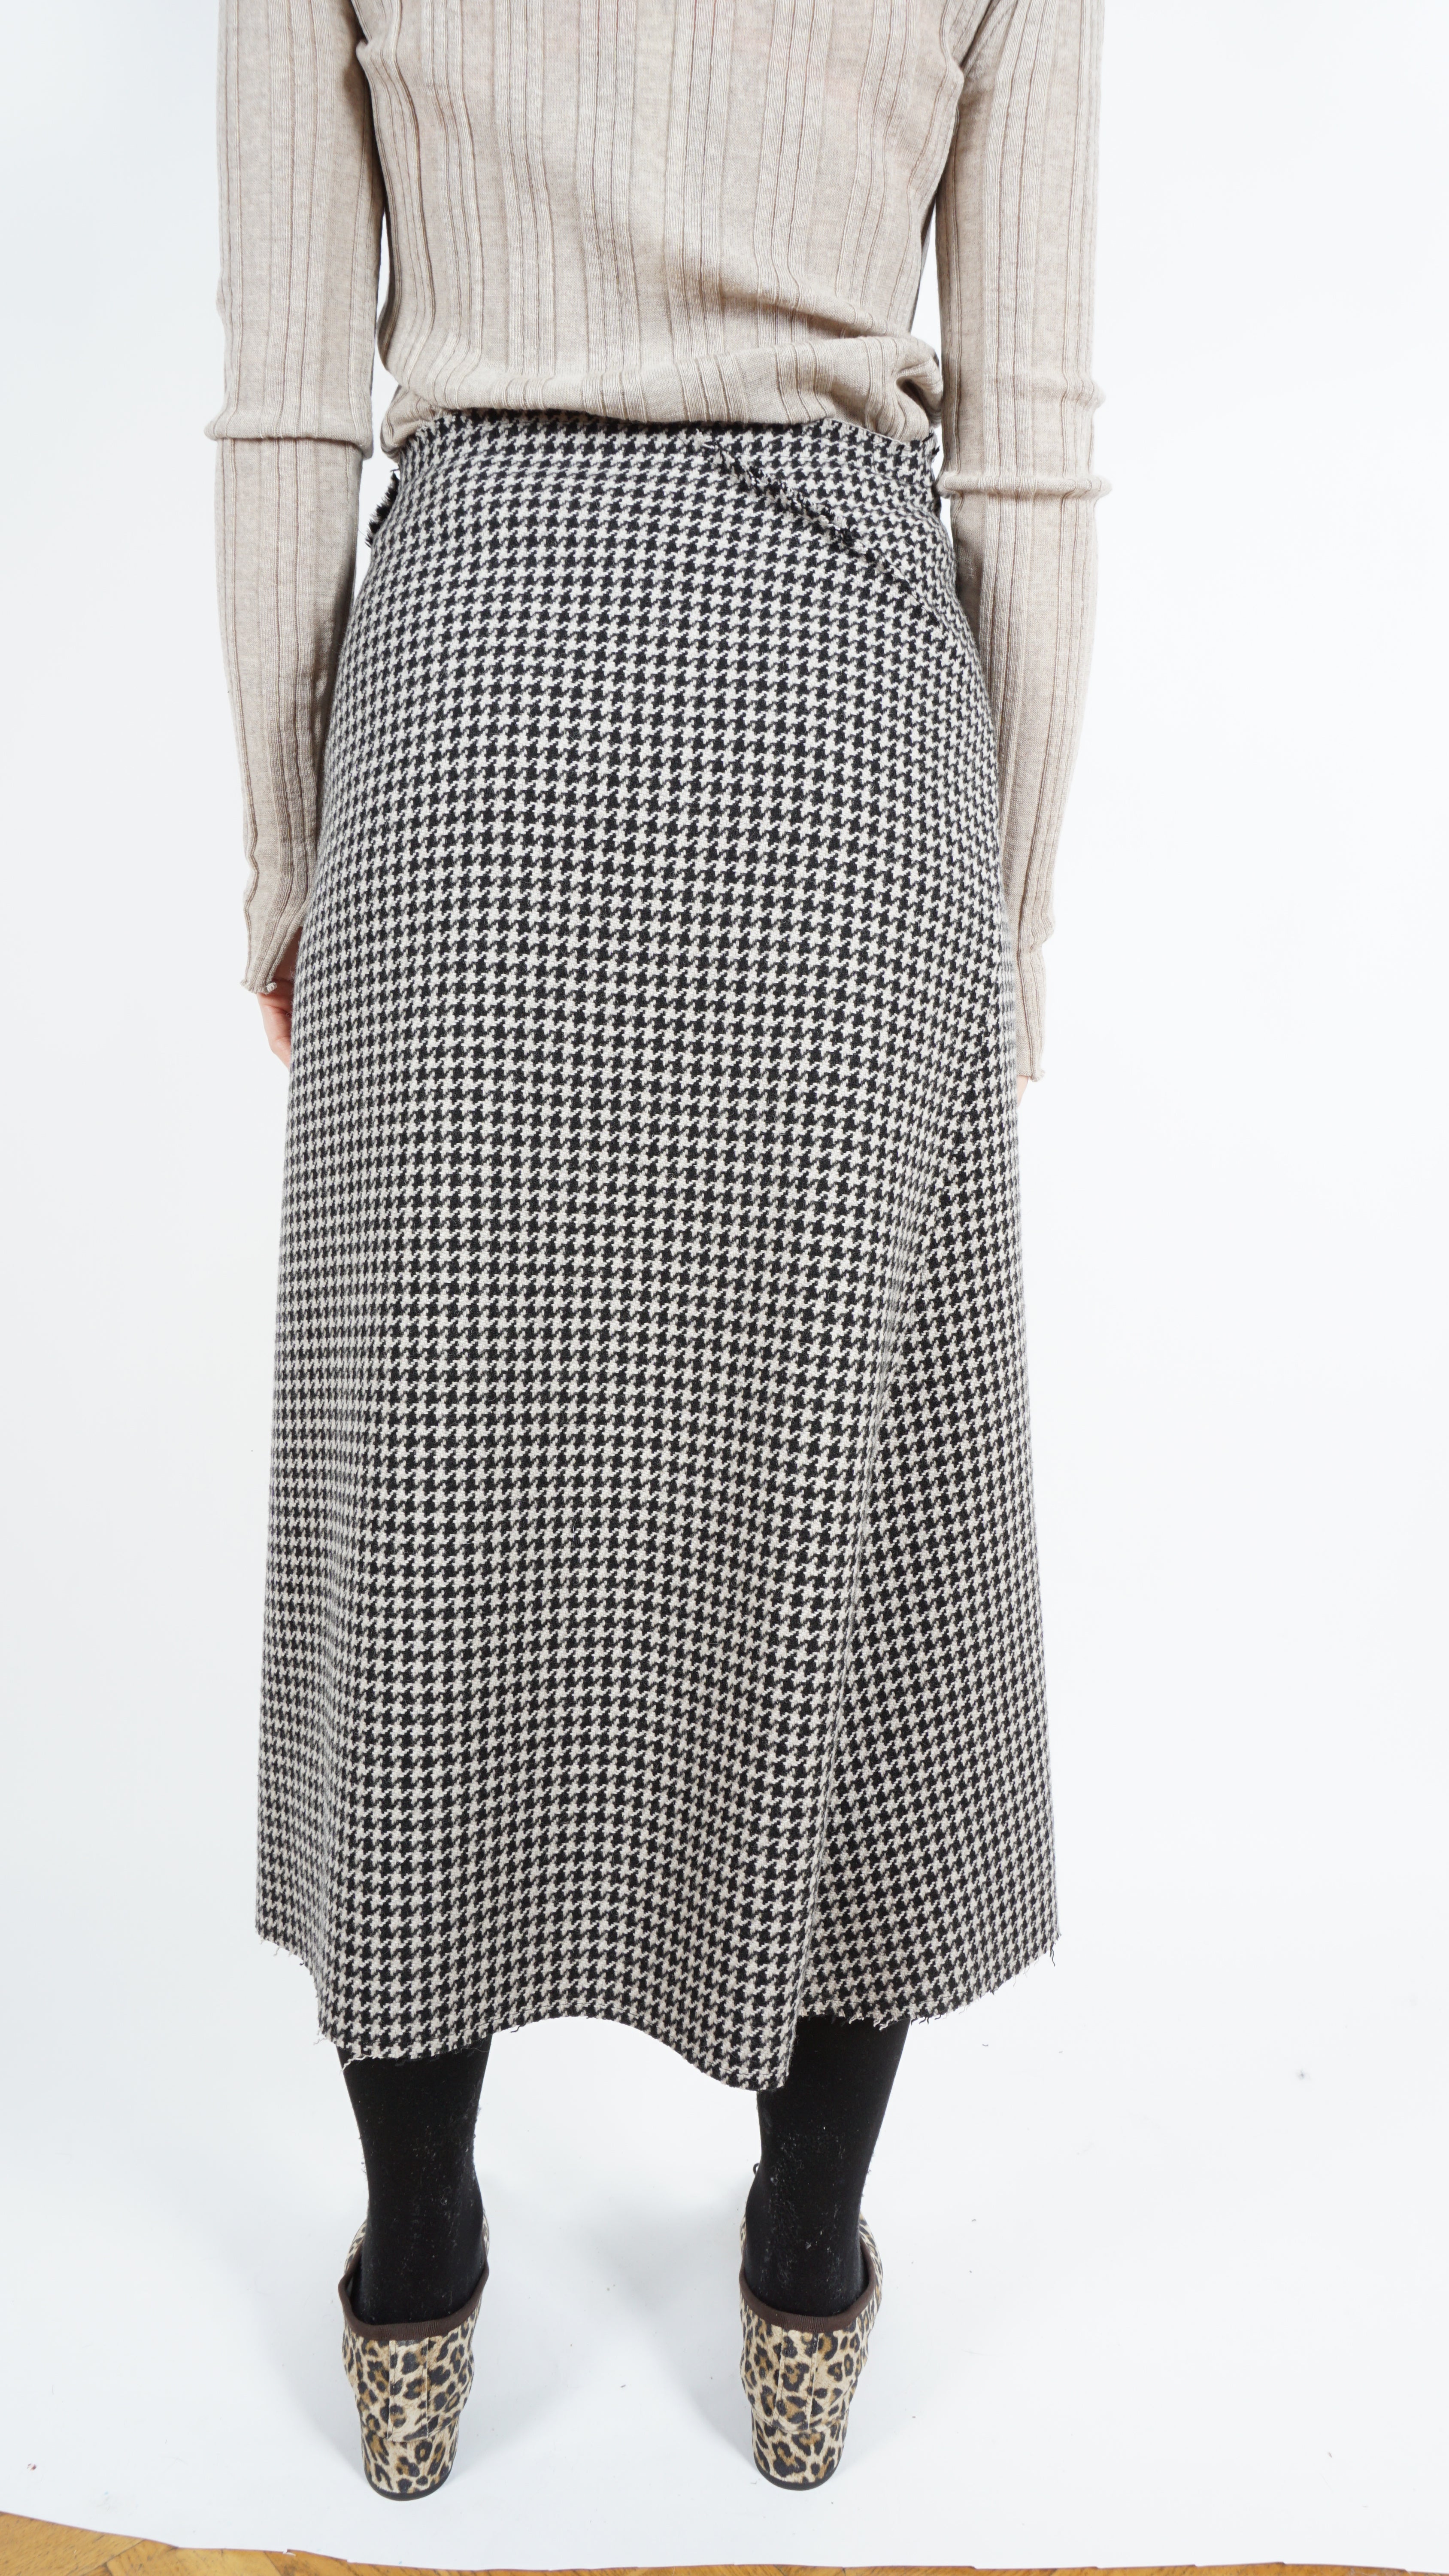 Checkered skirt by Bettina Bakdal